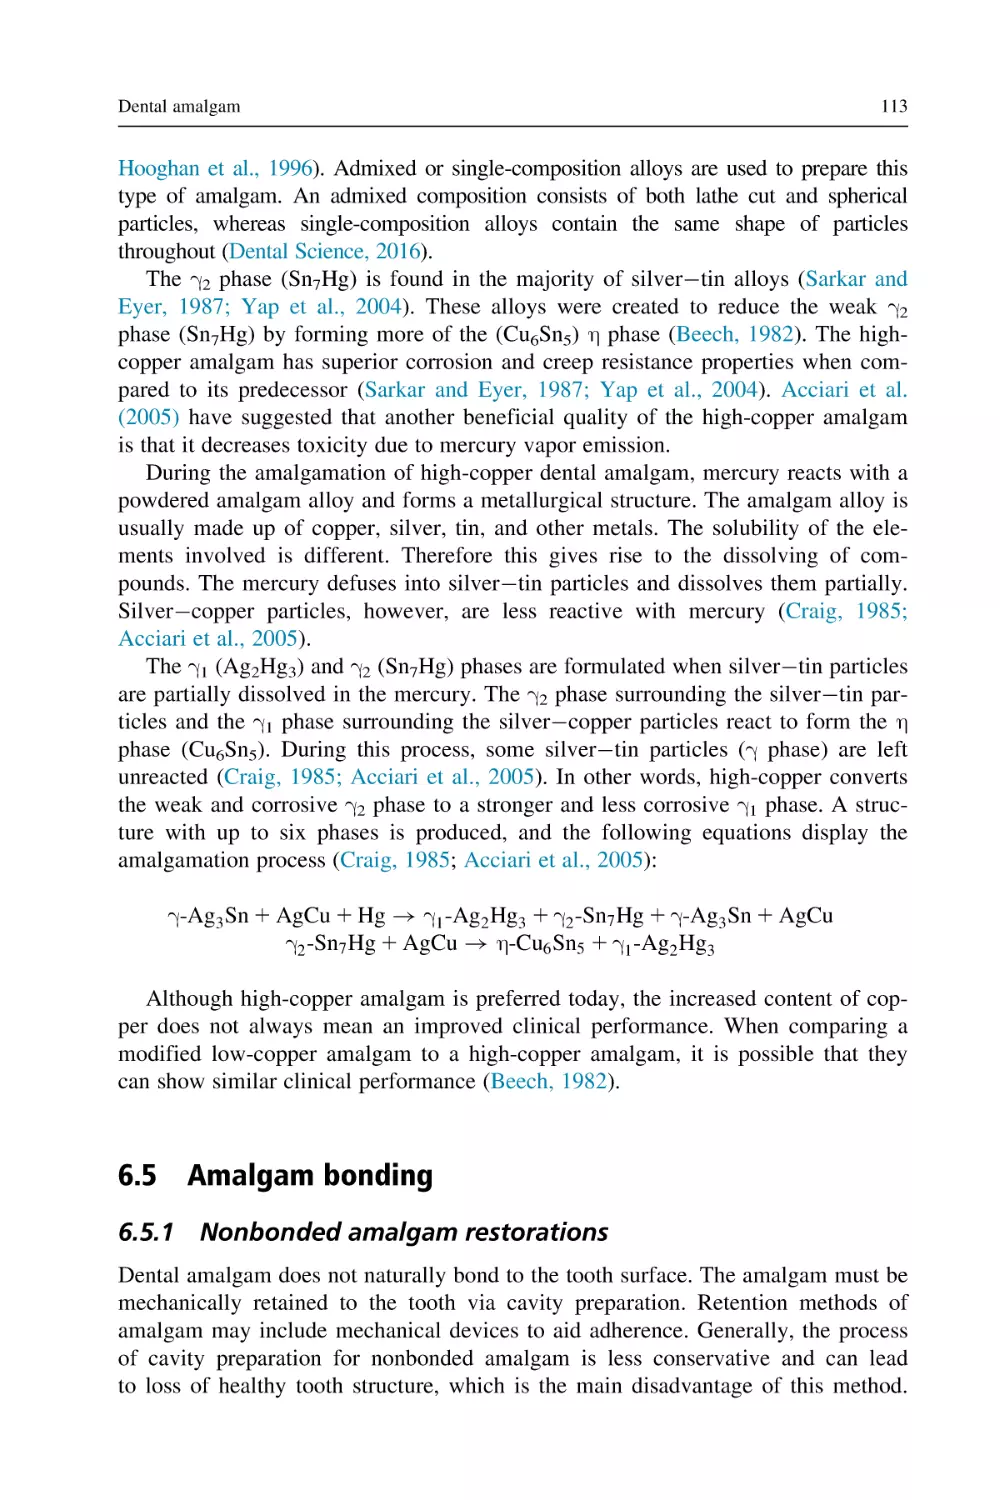 6.5 Amalgam bonding
6.5.1 Nonbonded amalgam restorations